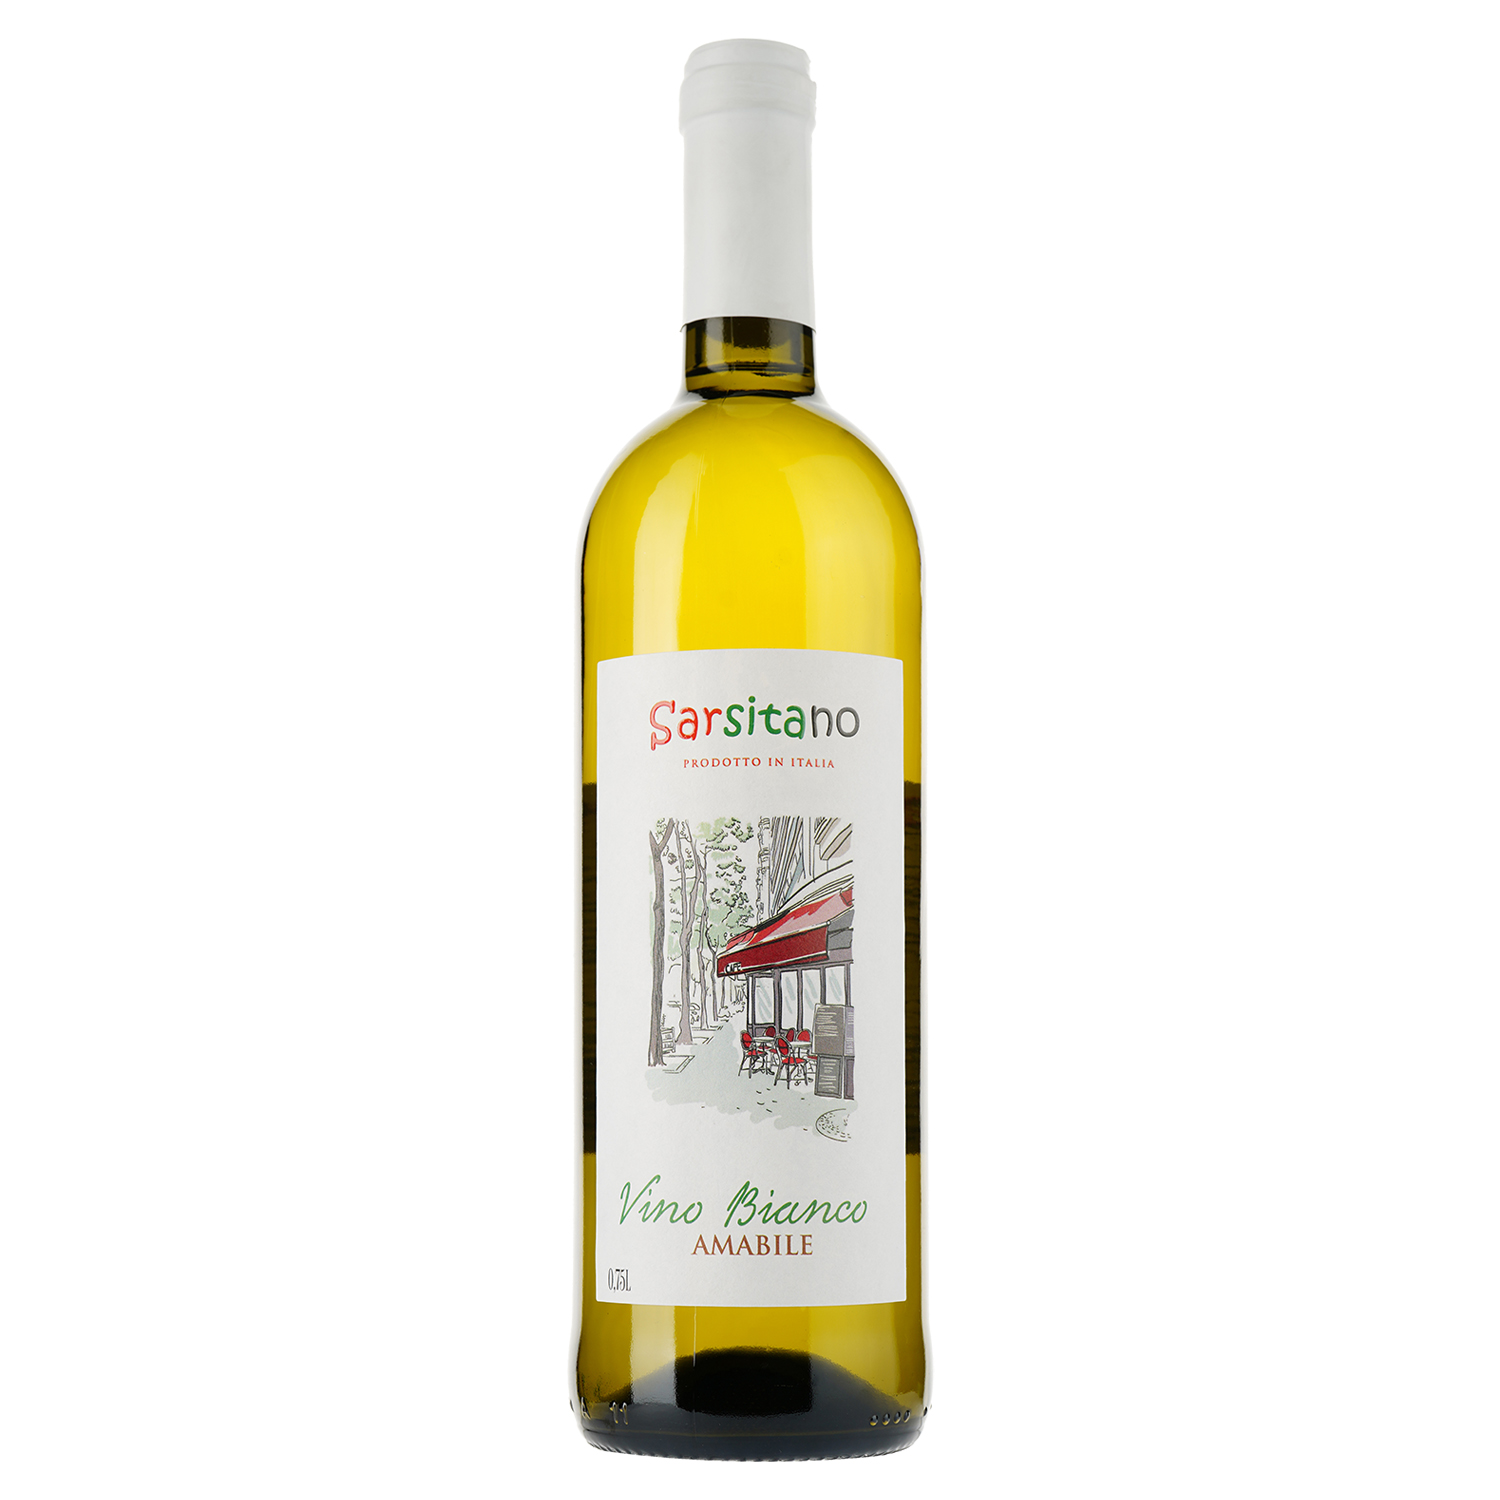 Вино Sarsitano Vino Bianco Amabile, белое, полусладкое, 0,75 л - фото 1